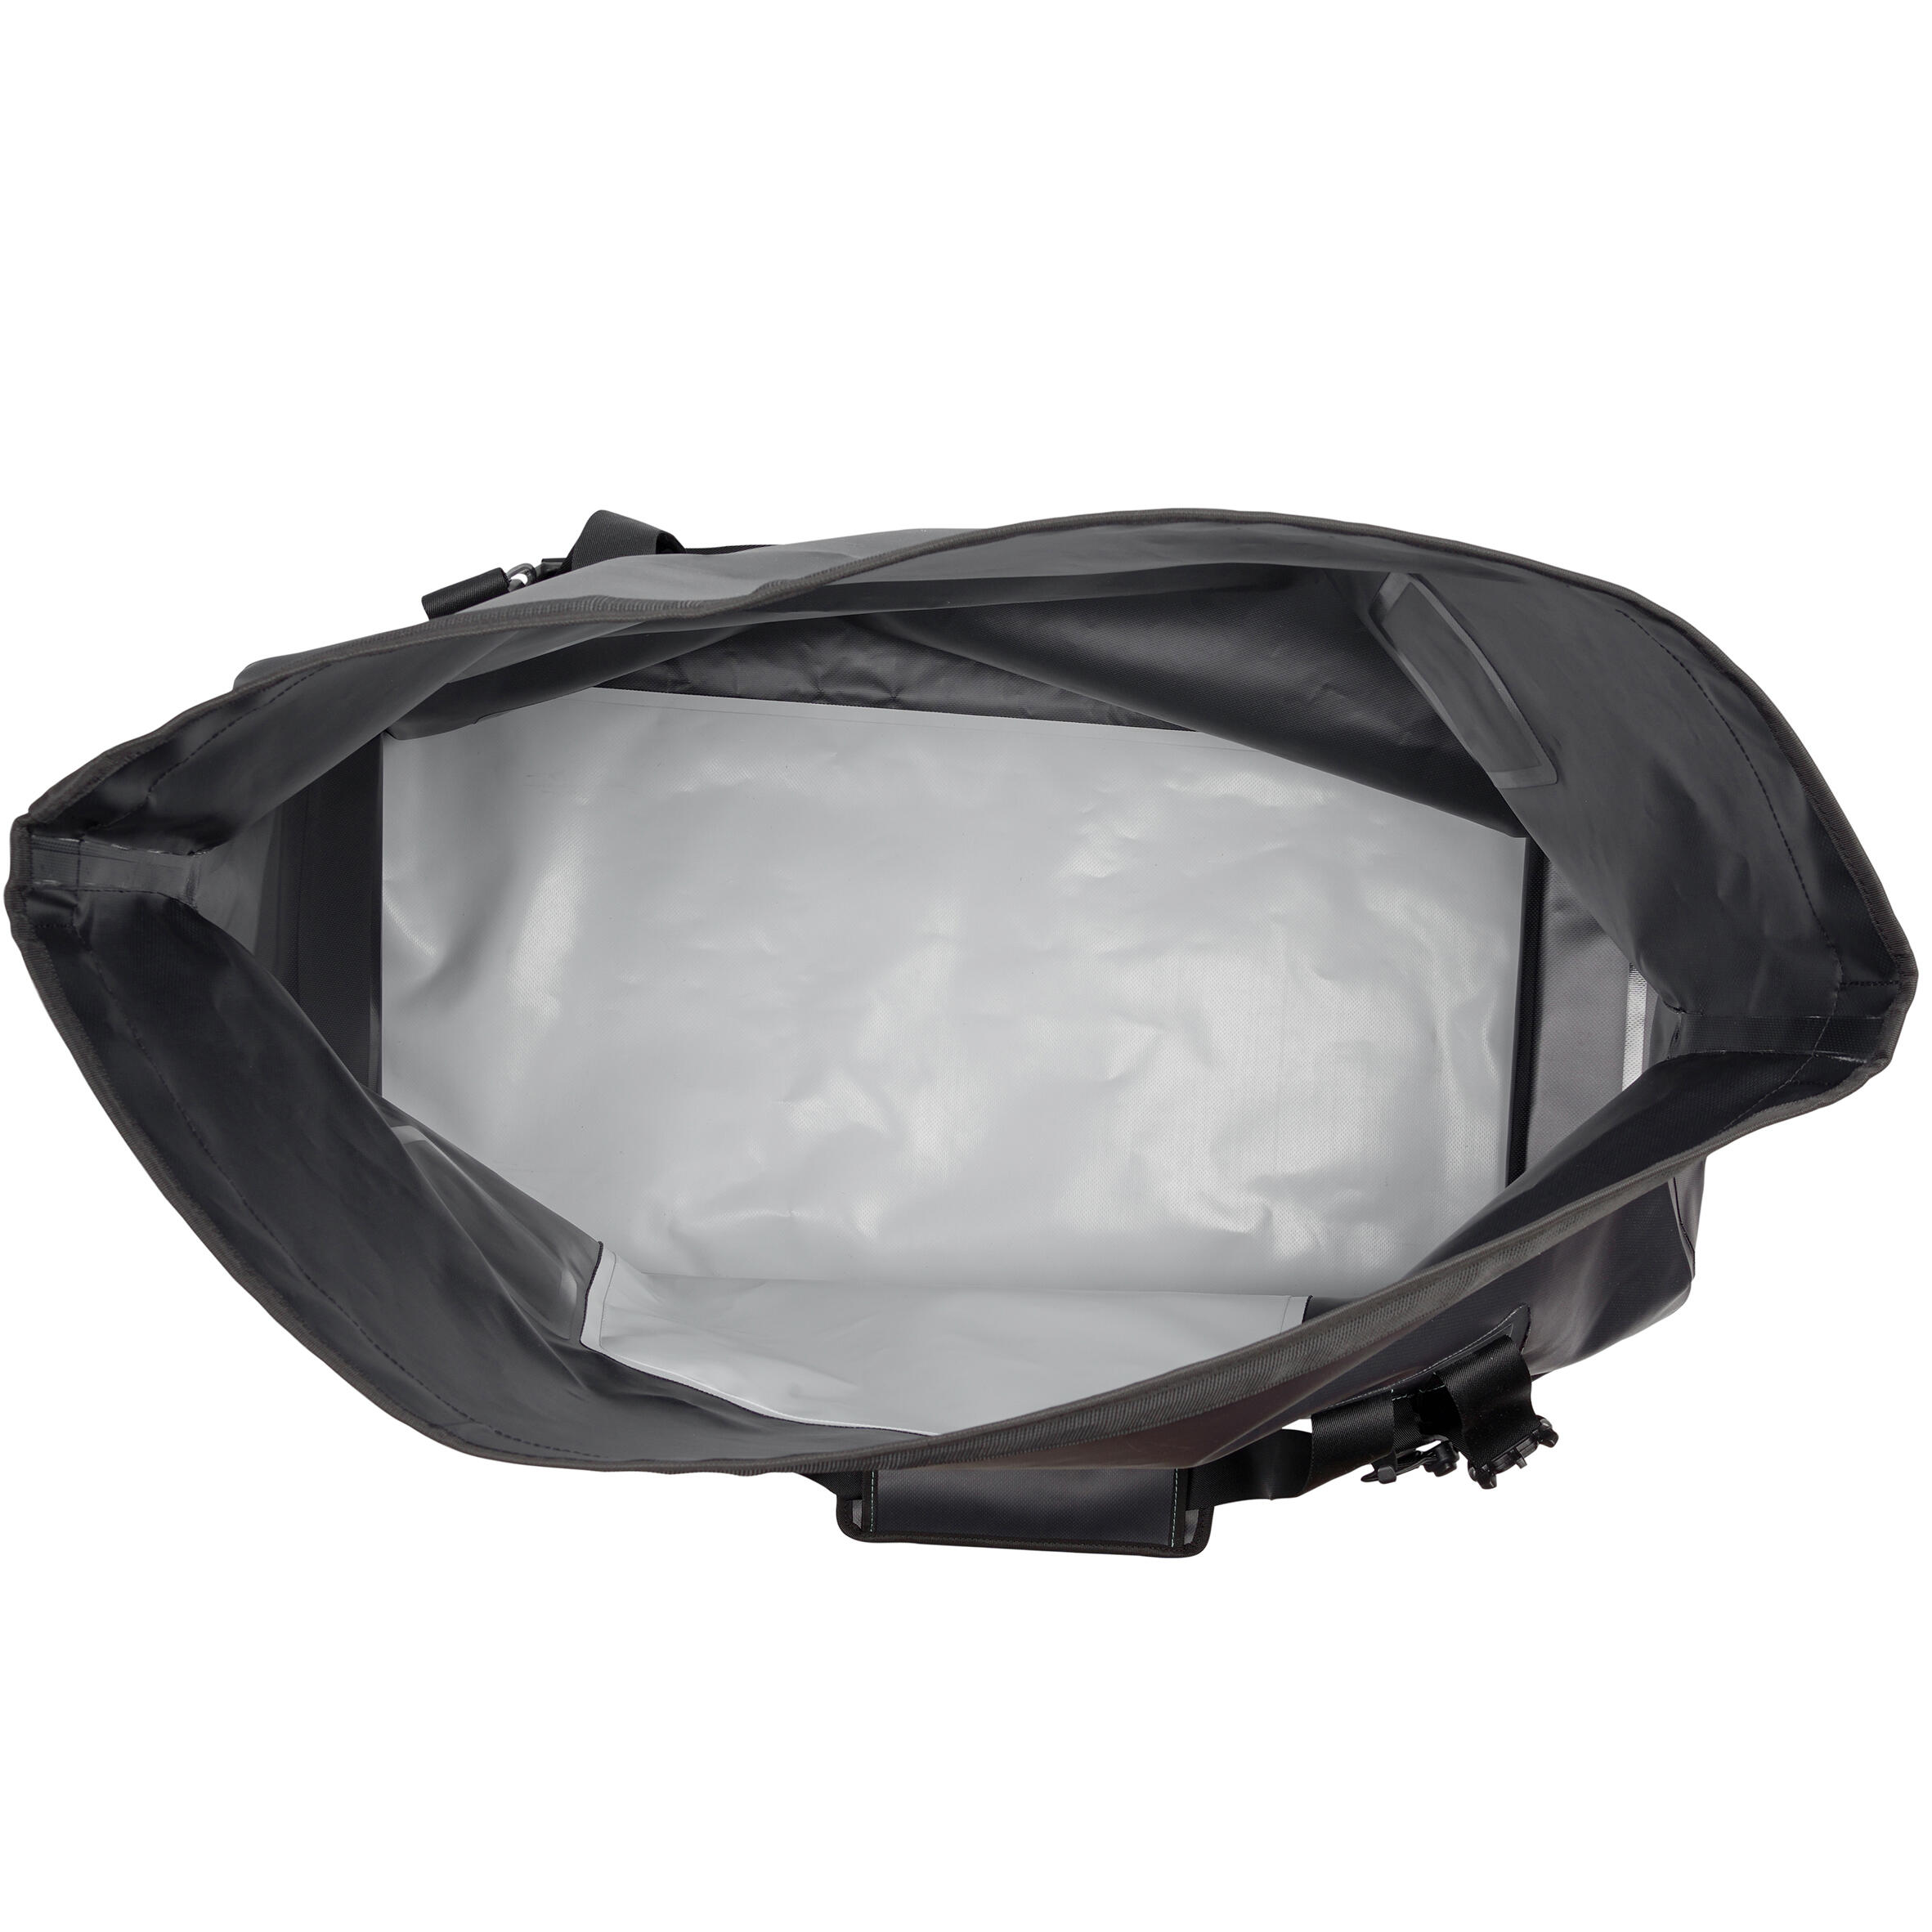 Diving bag watertight IPX6 100 L black grey 8/8